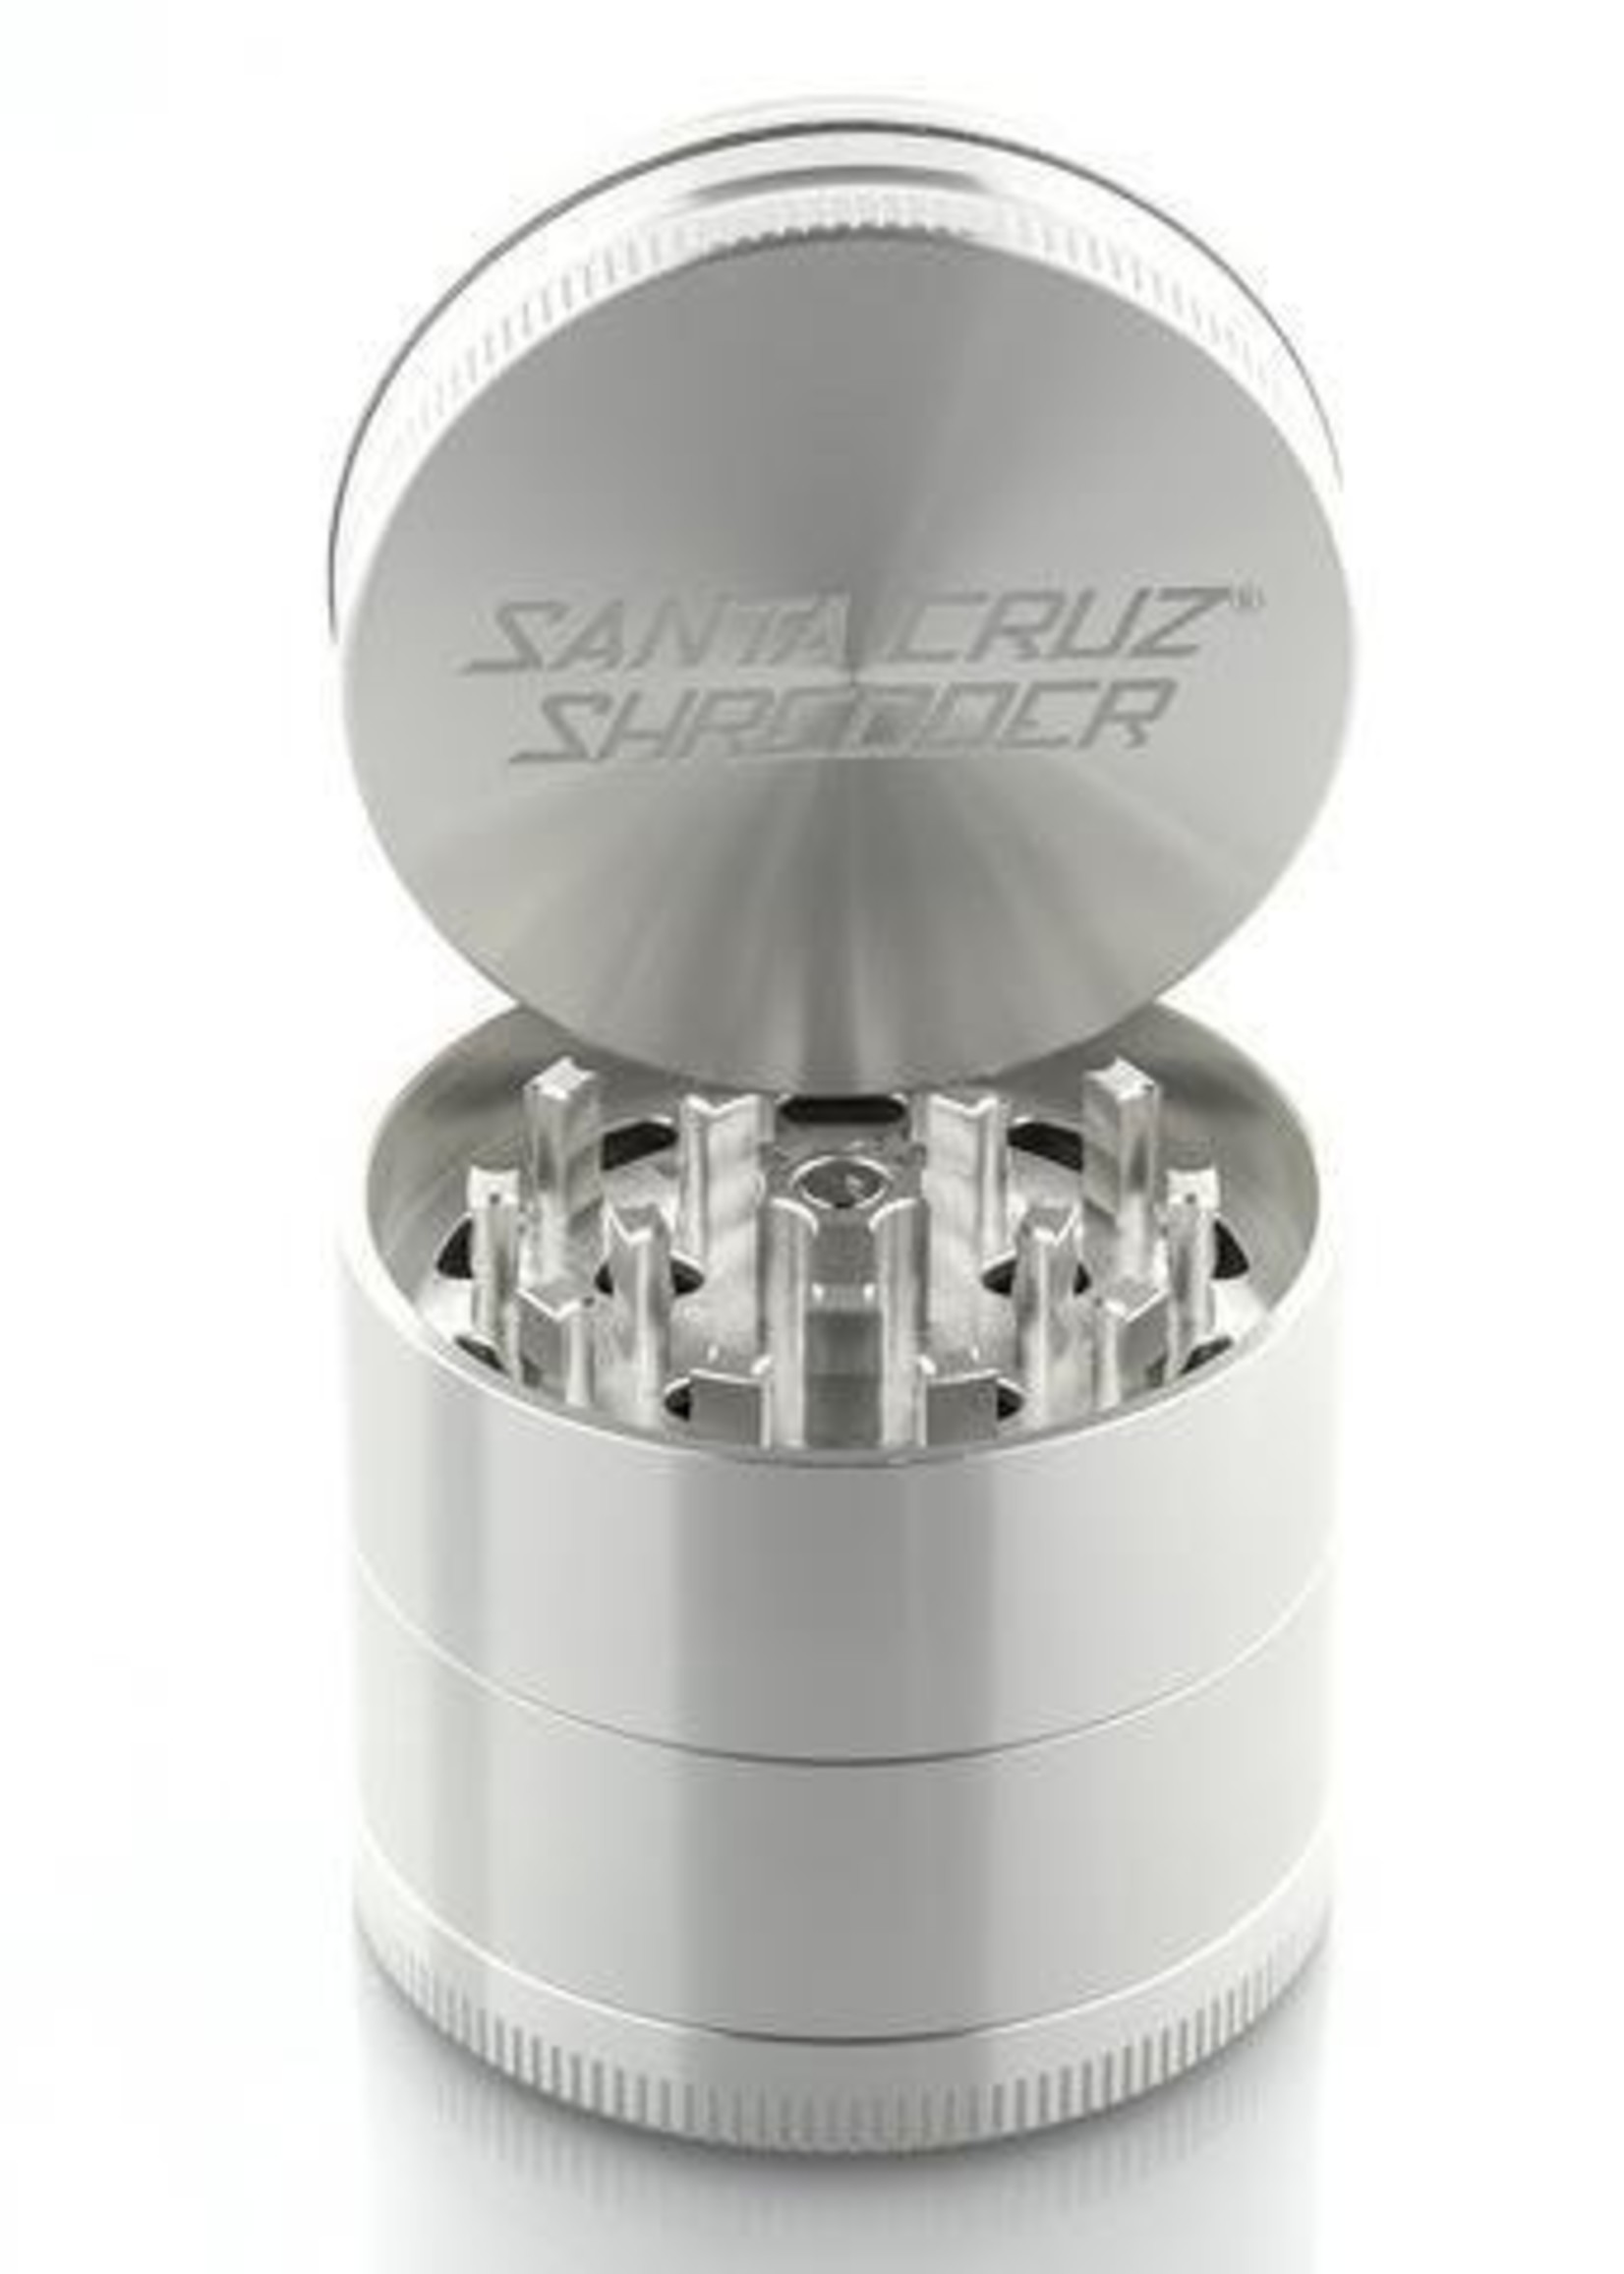 SANTA CRUZ Grinder LG Silver 4pc 2 3/4"